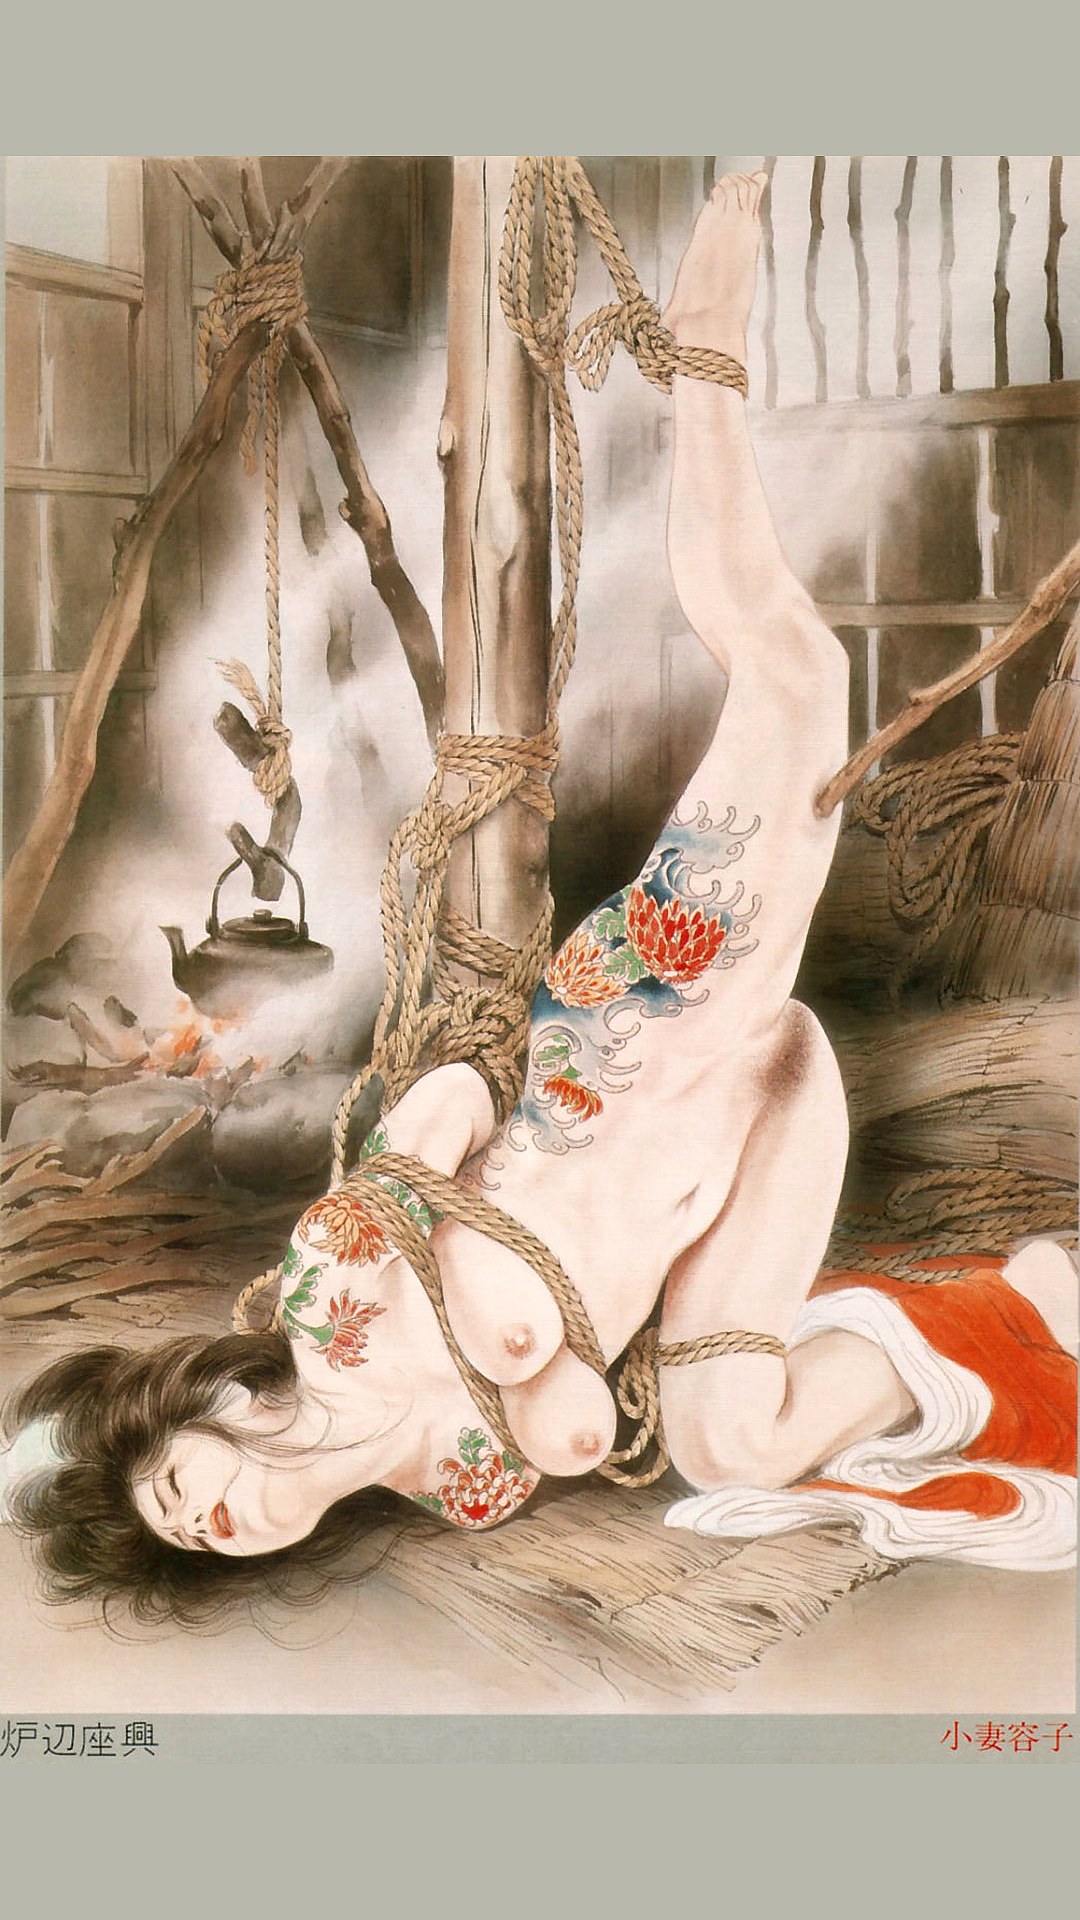 эротика японских рисунках фото 80